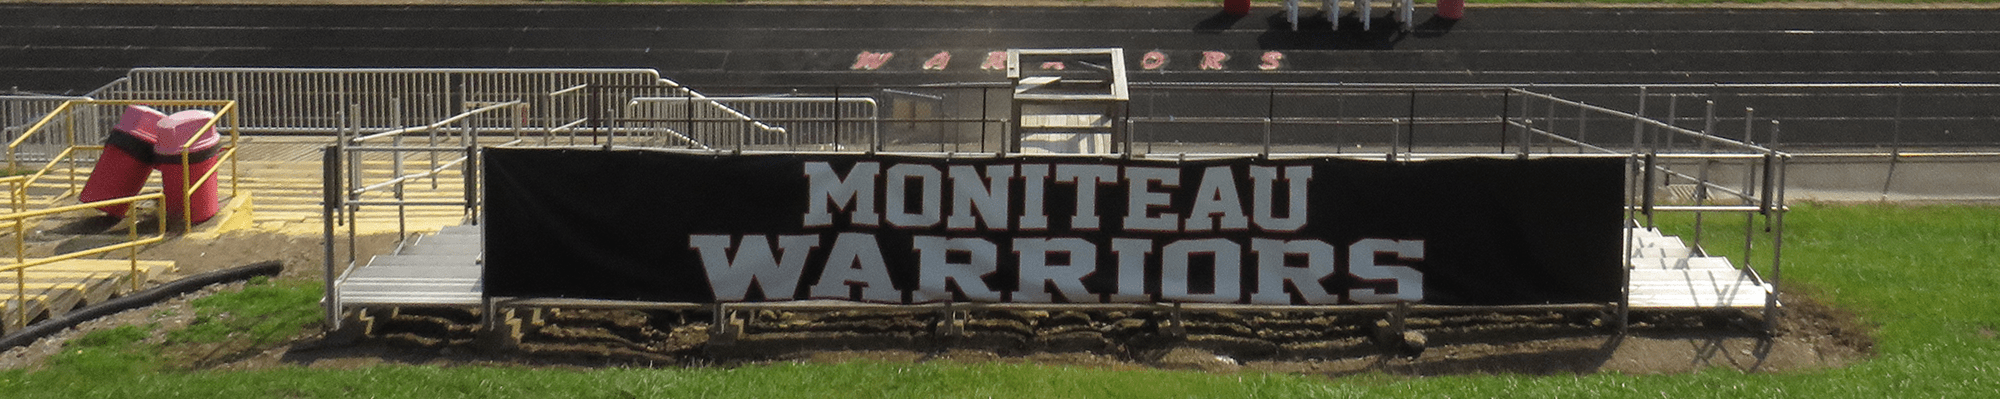 Moniteau Warriors sign at football field